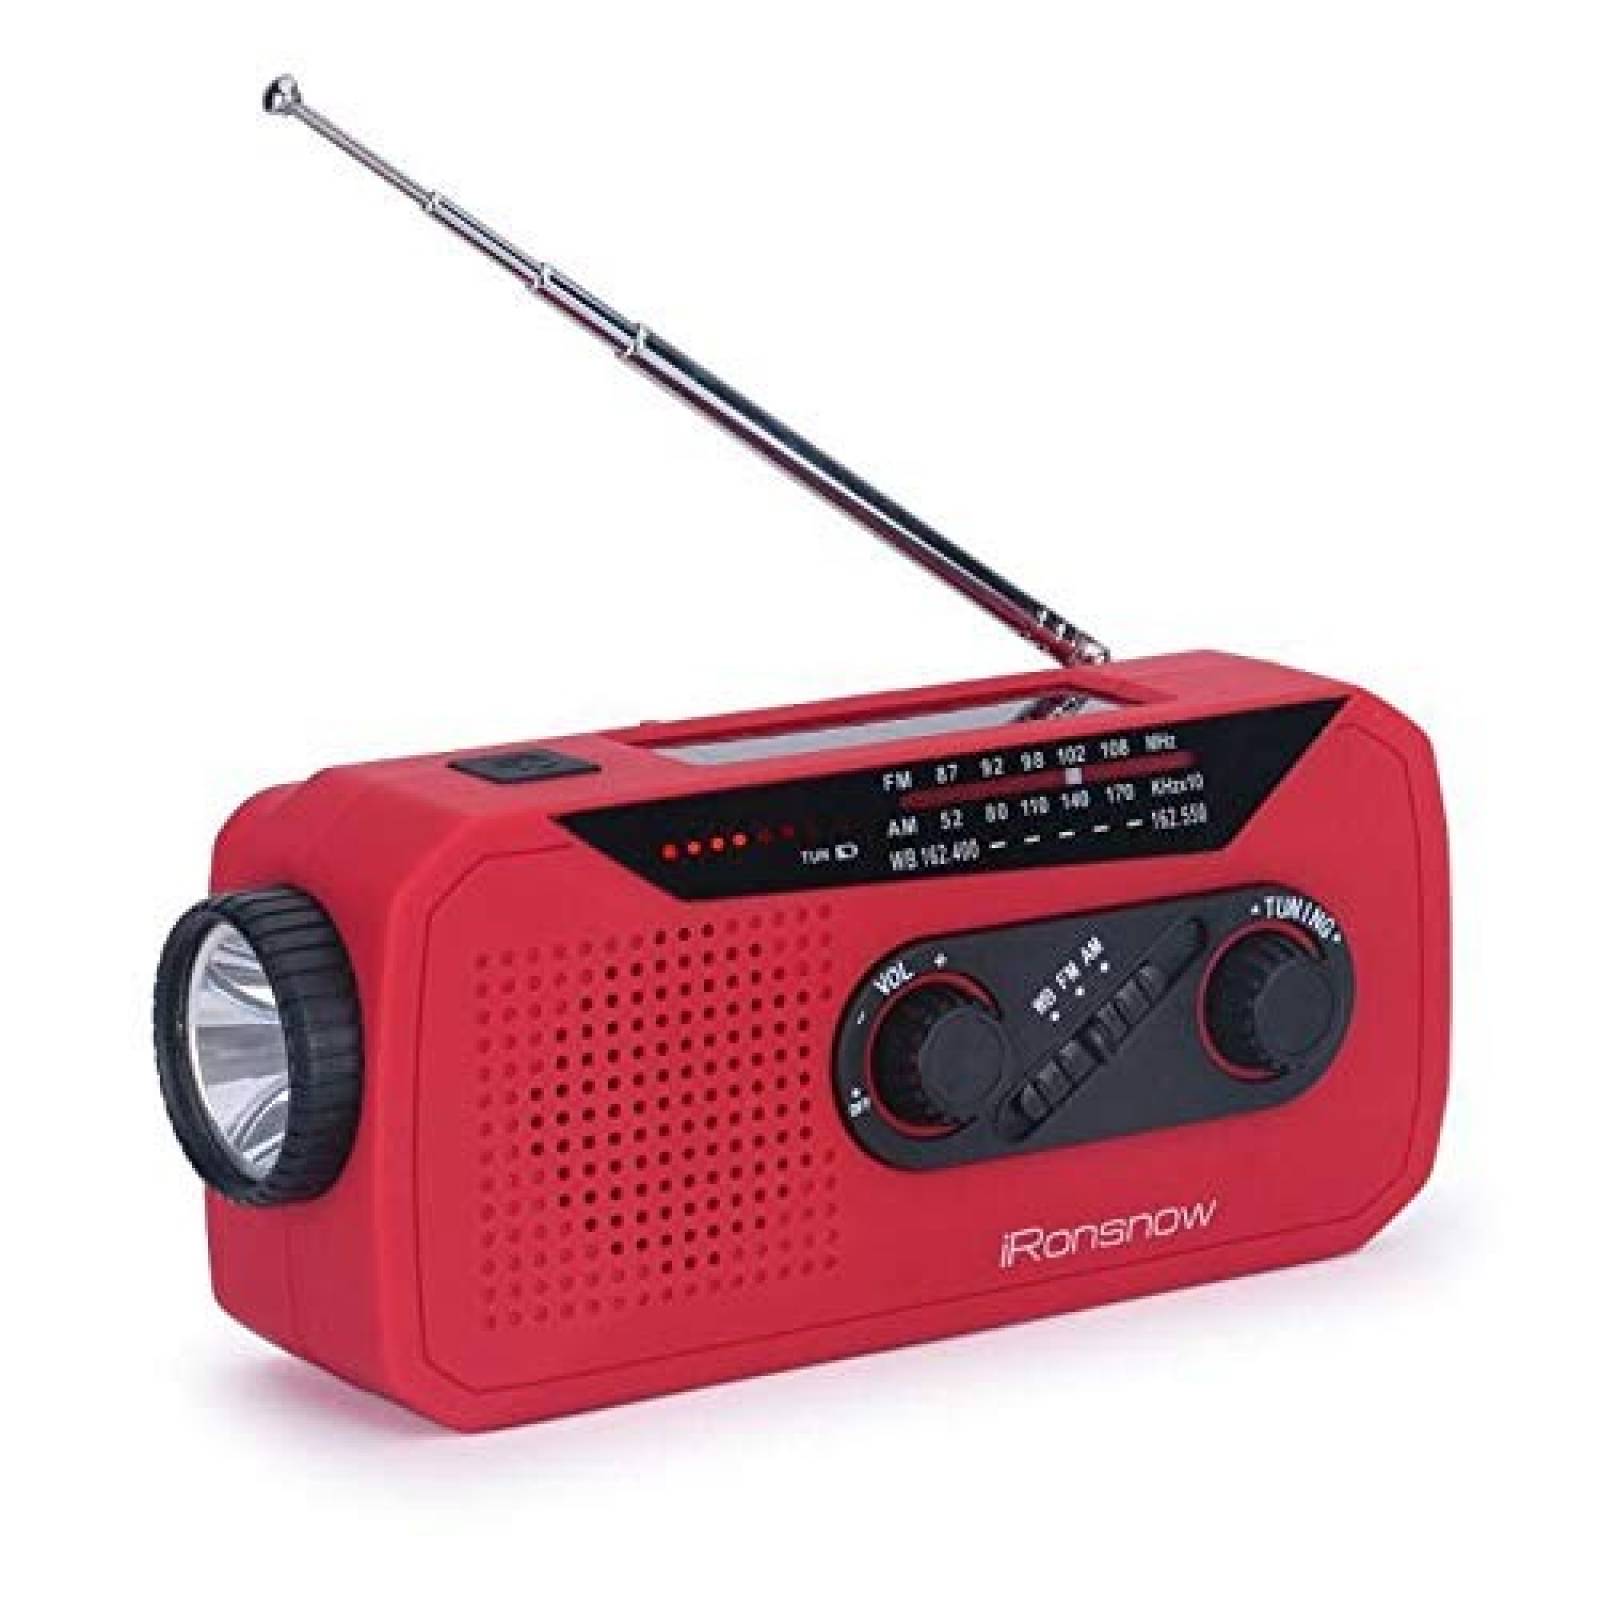 Radio de energía solar iRonsnow IS-366 AM FM linterna -Rojo